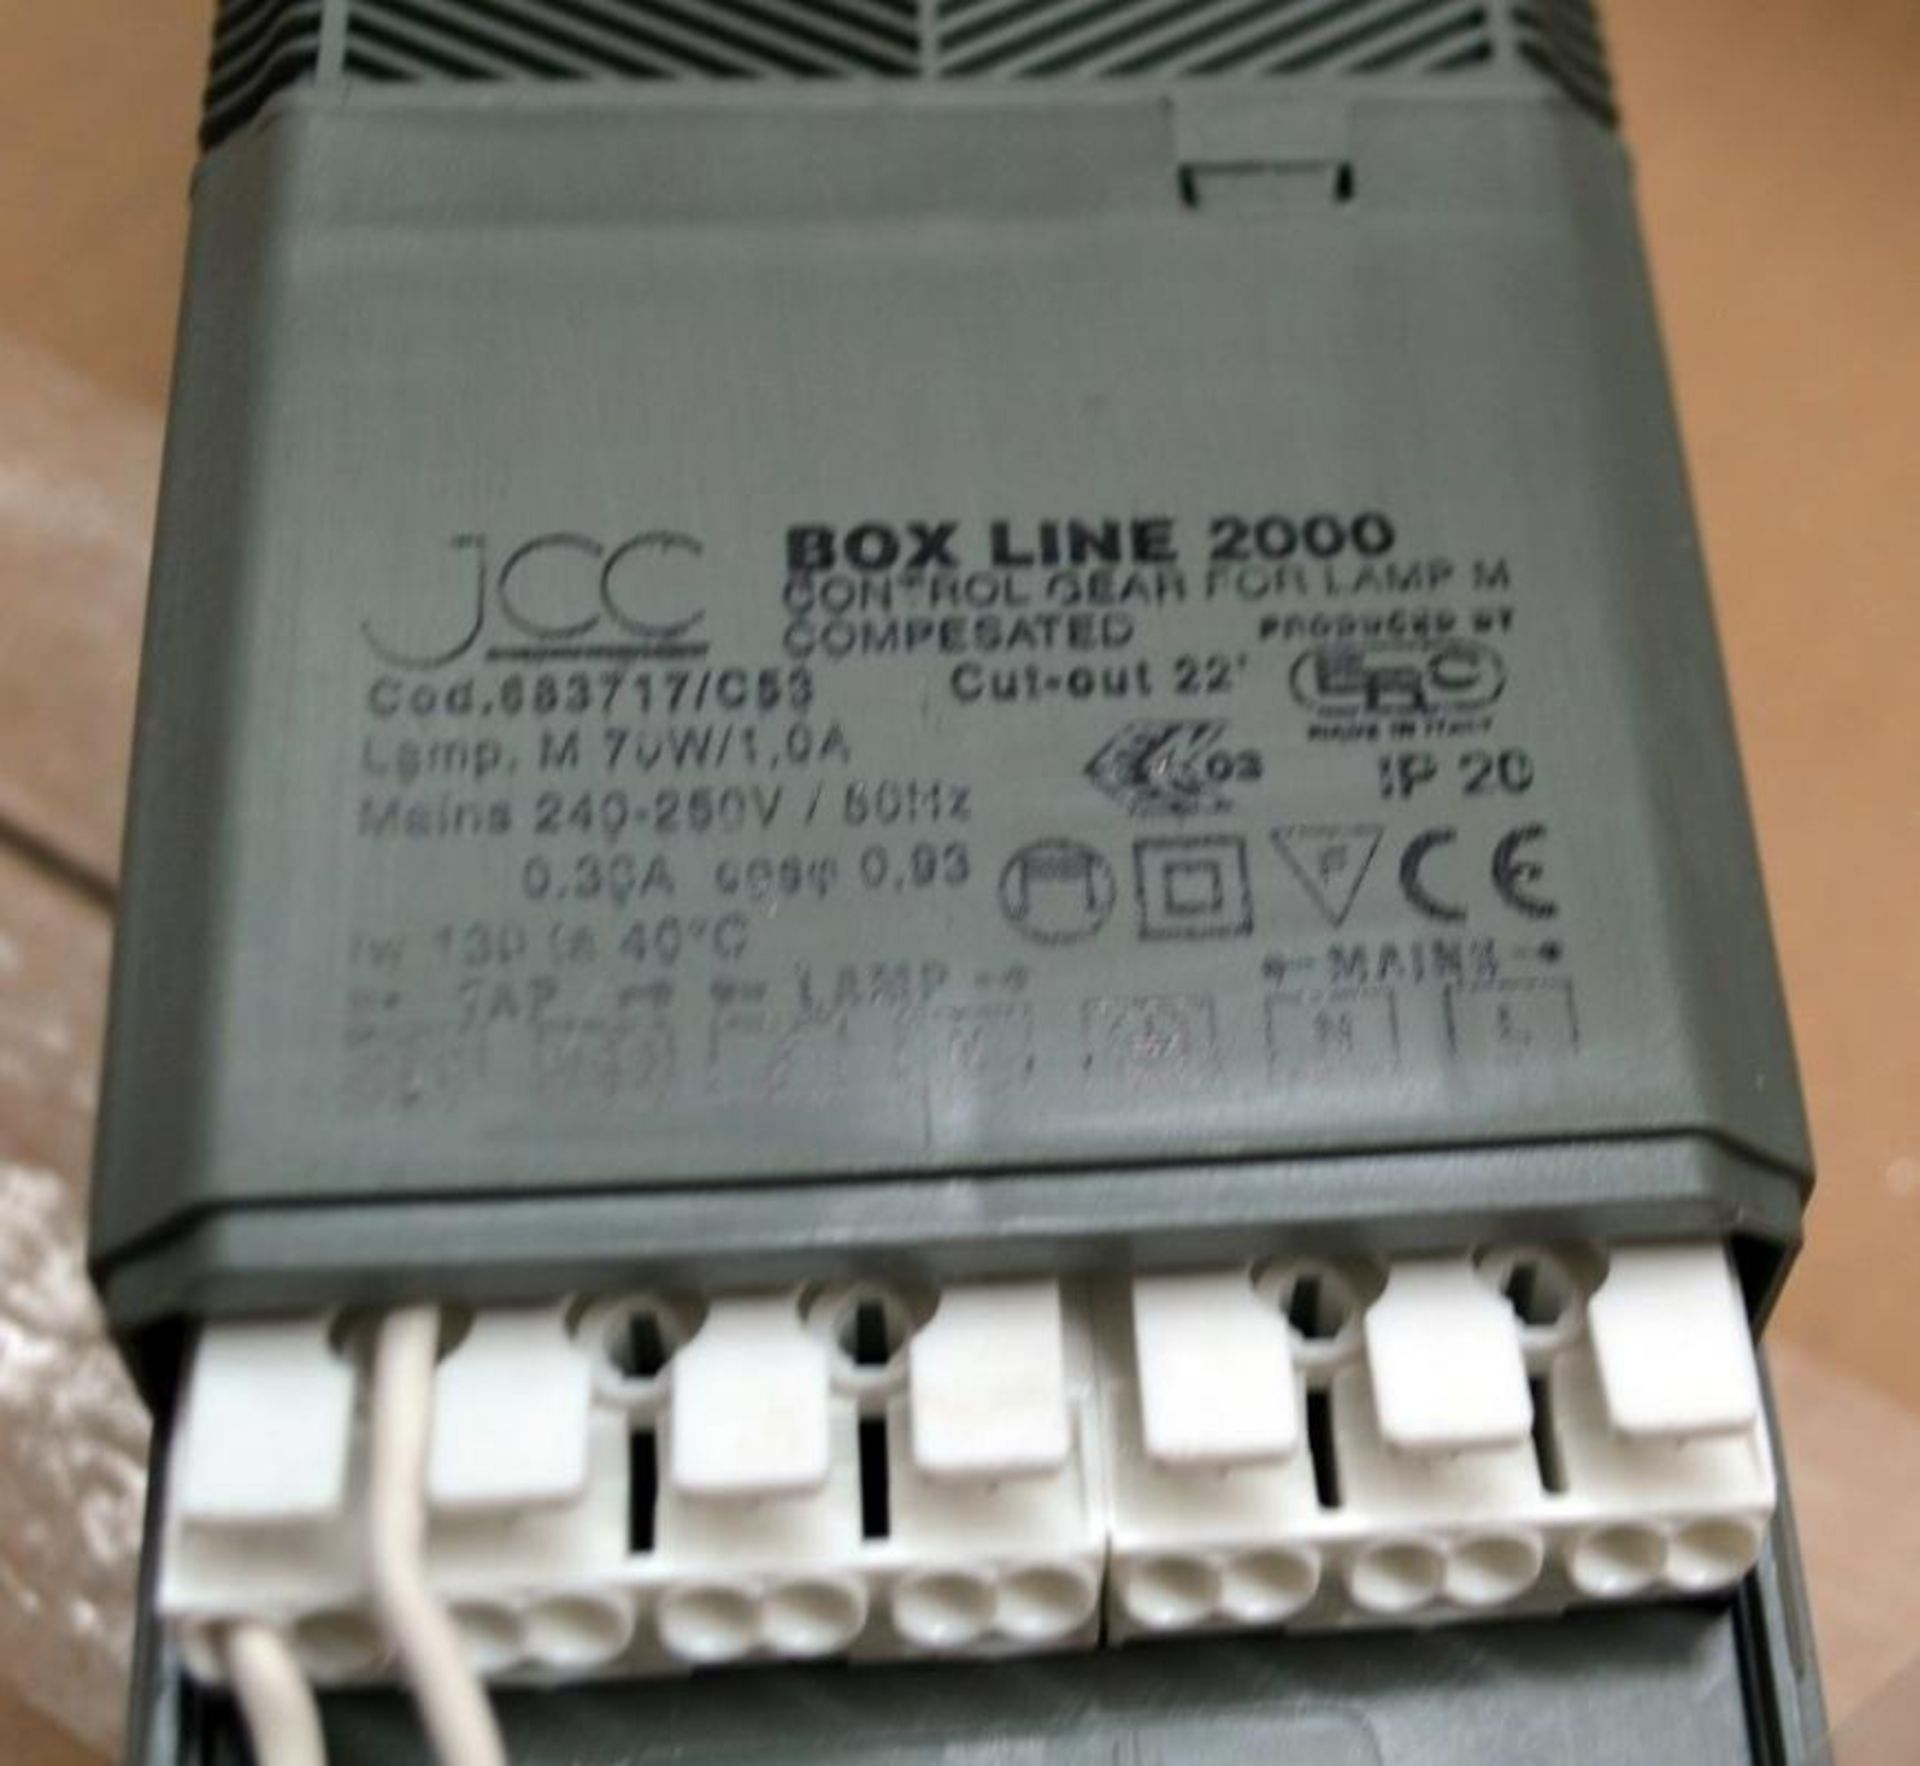 5 x JCC Lighting JC16002 Remote Gearboxes - Box Line 2000 - 240V-250V/ 50HZ HQI - New/Unused Stock - - Image 4 of 5